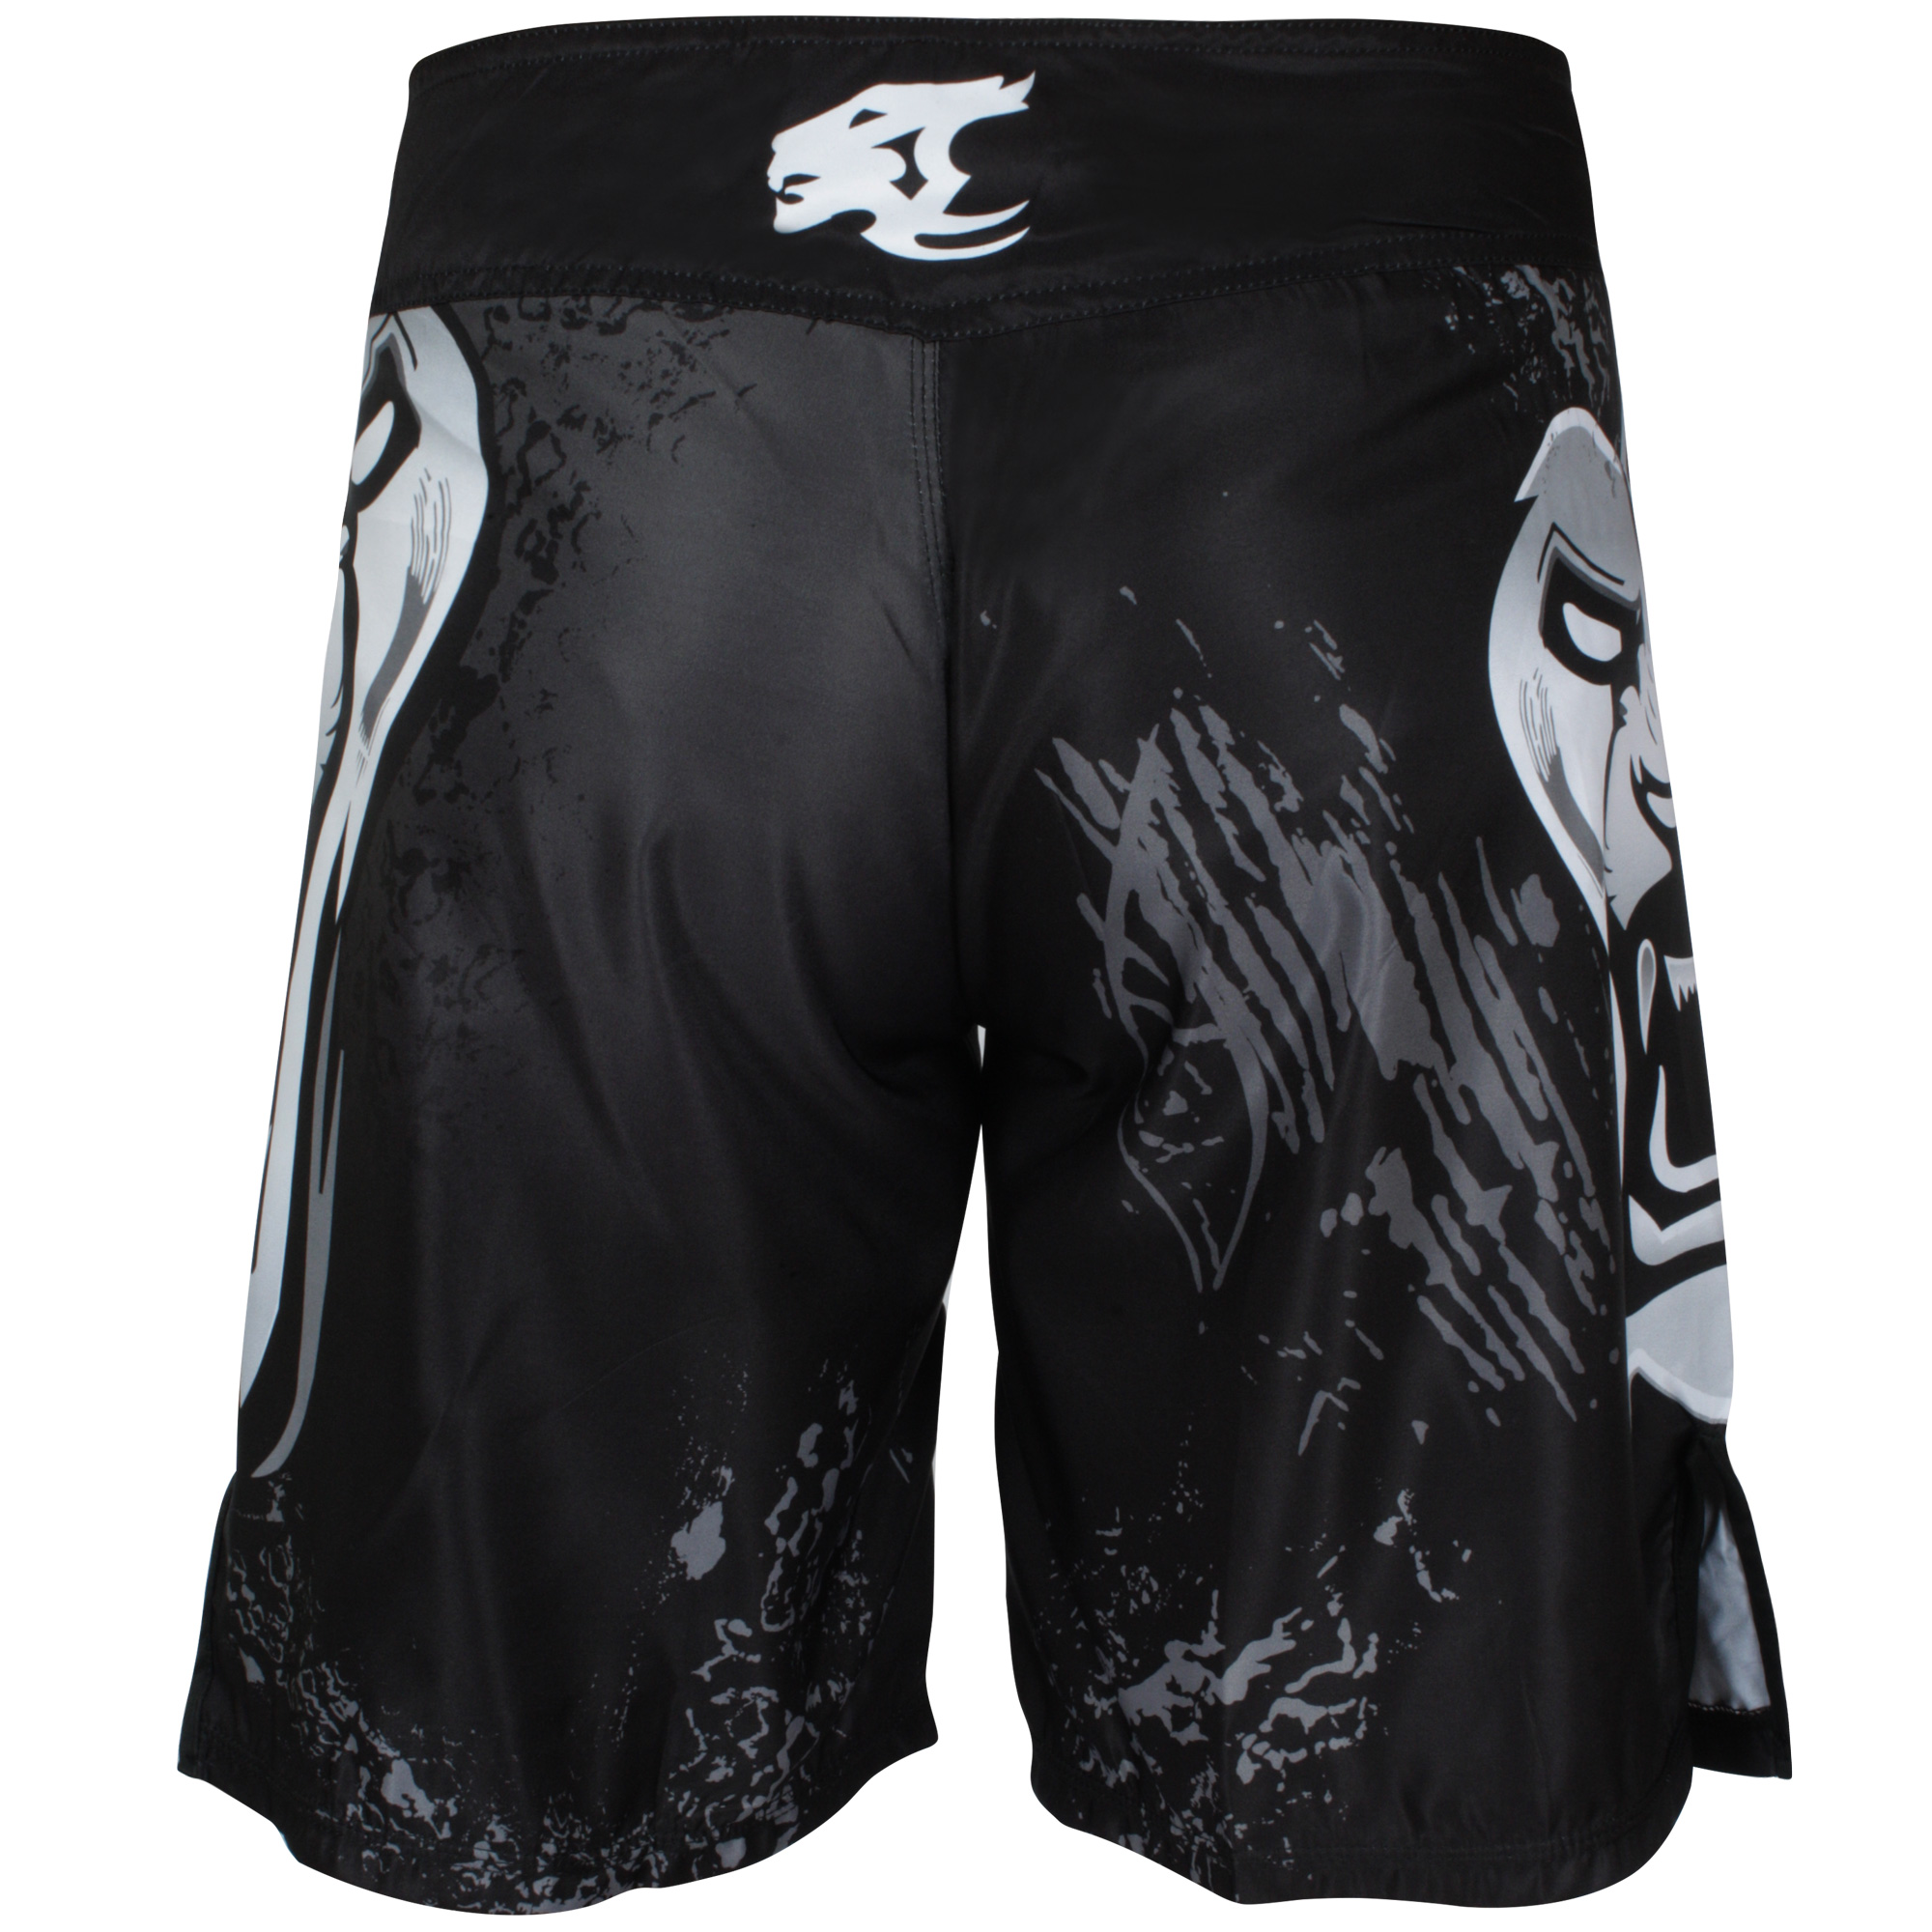 Tigon Pro Fight Gear MMA Training UFC MMA Grappling Fusion Stretch Shorts 